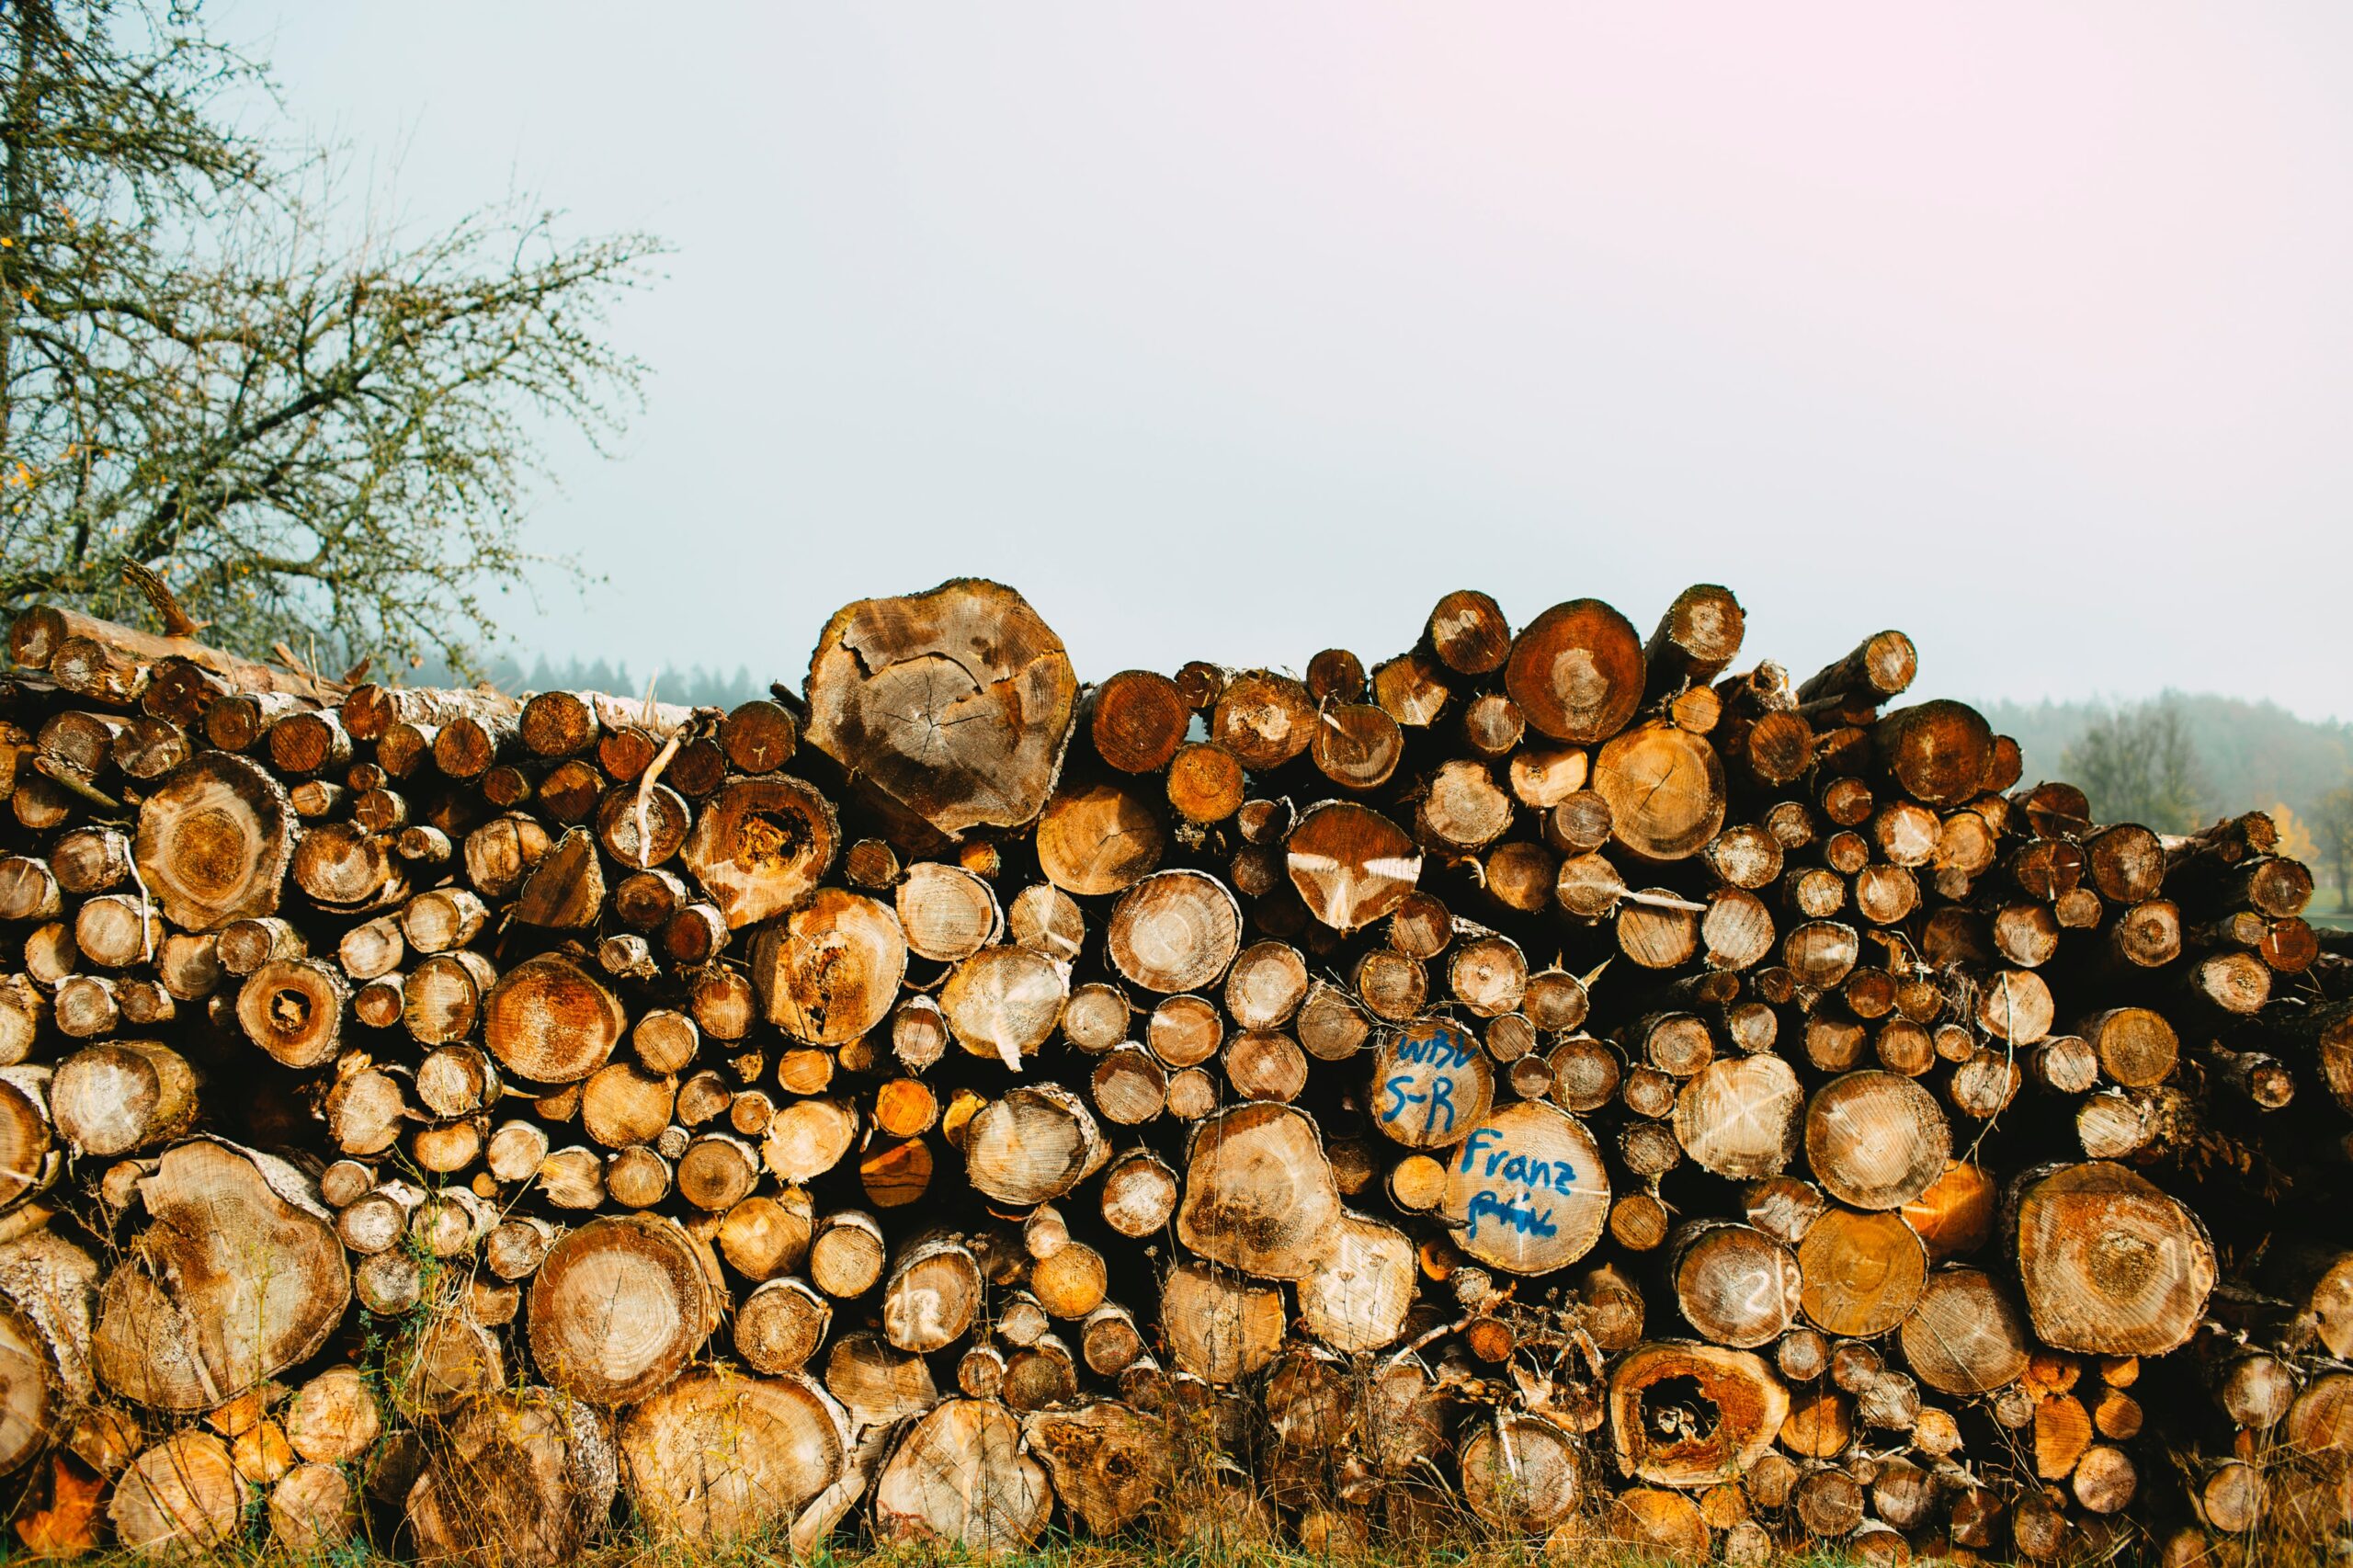 Burning wood pellets won’t help us fight climate change